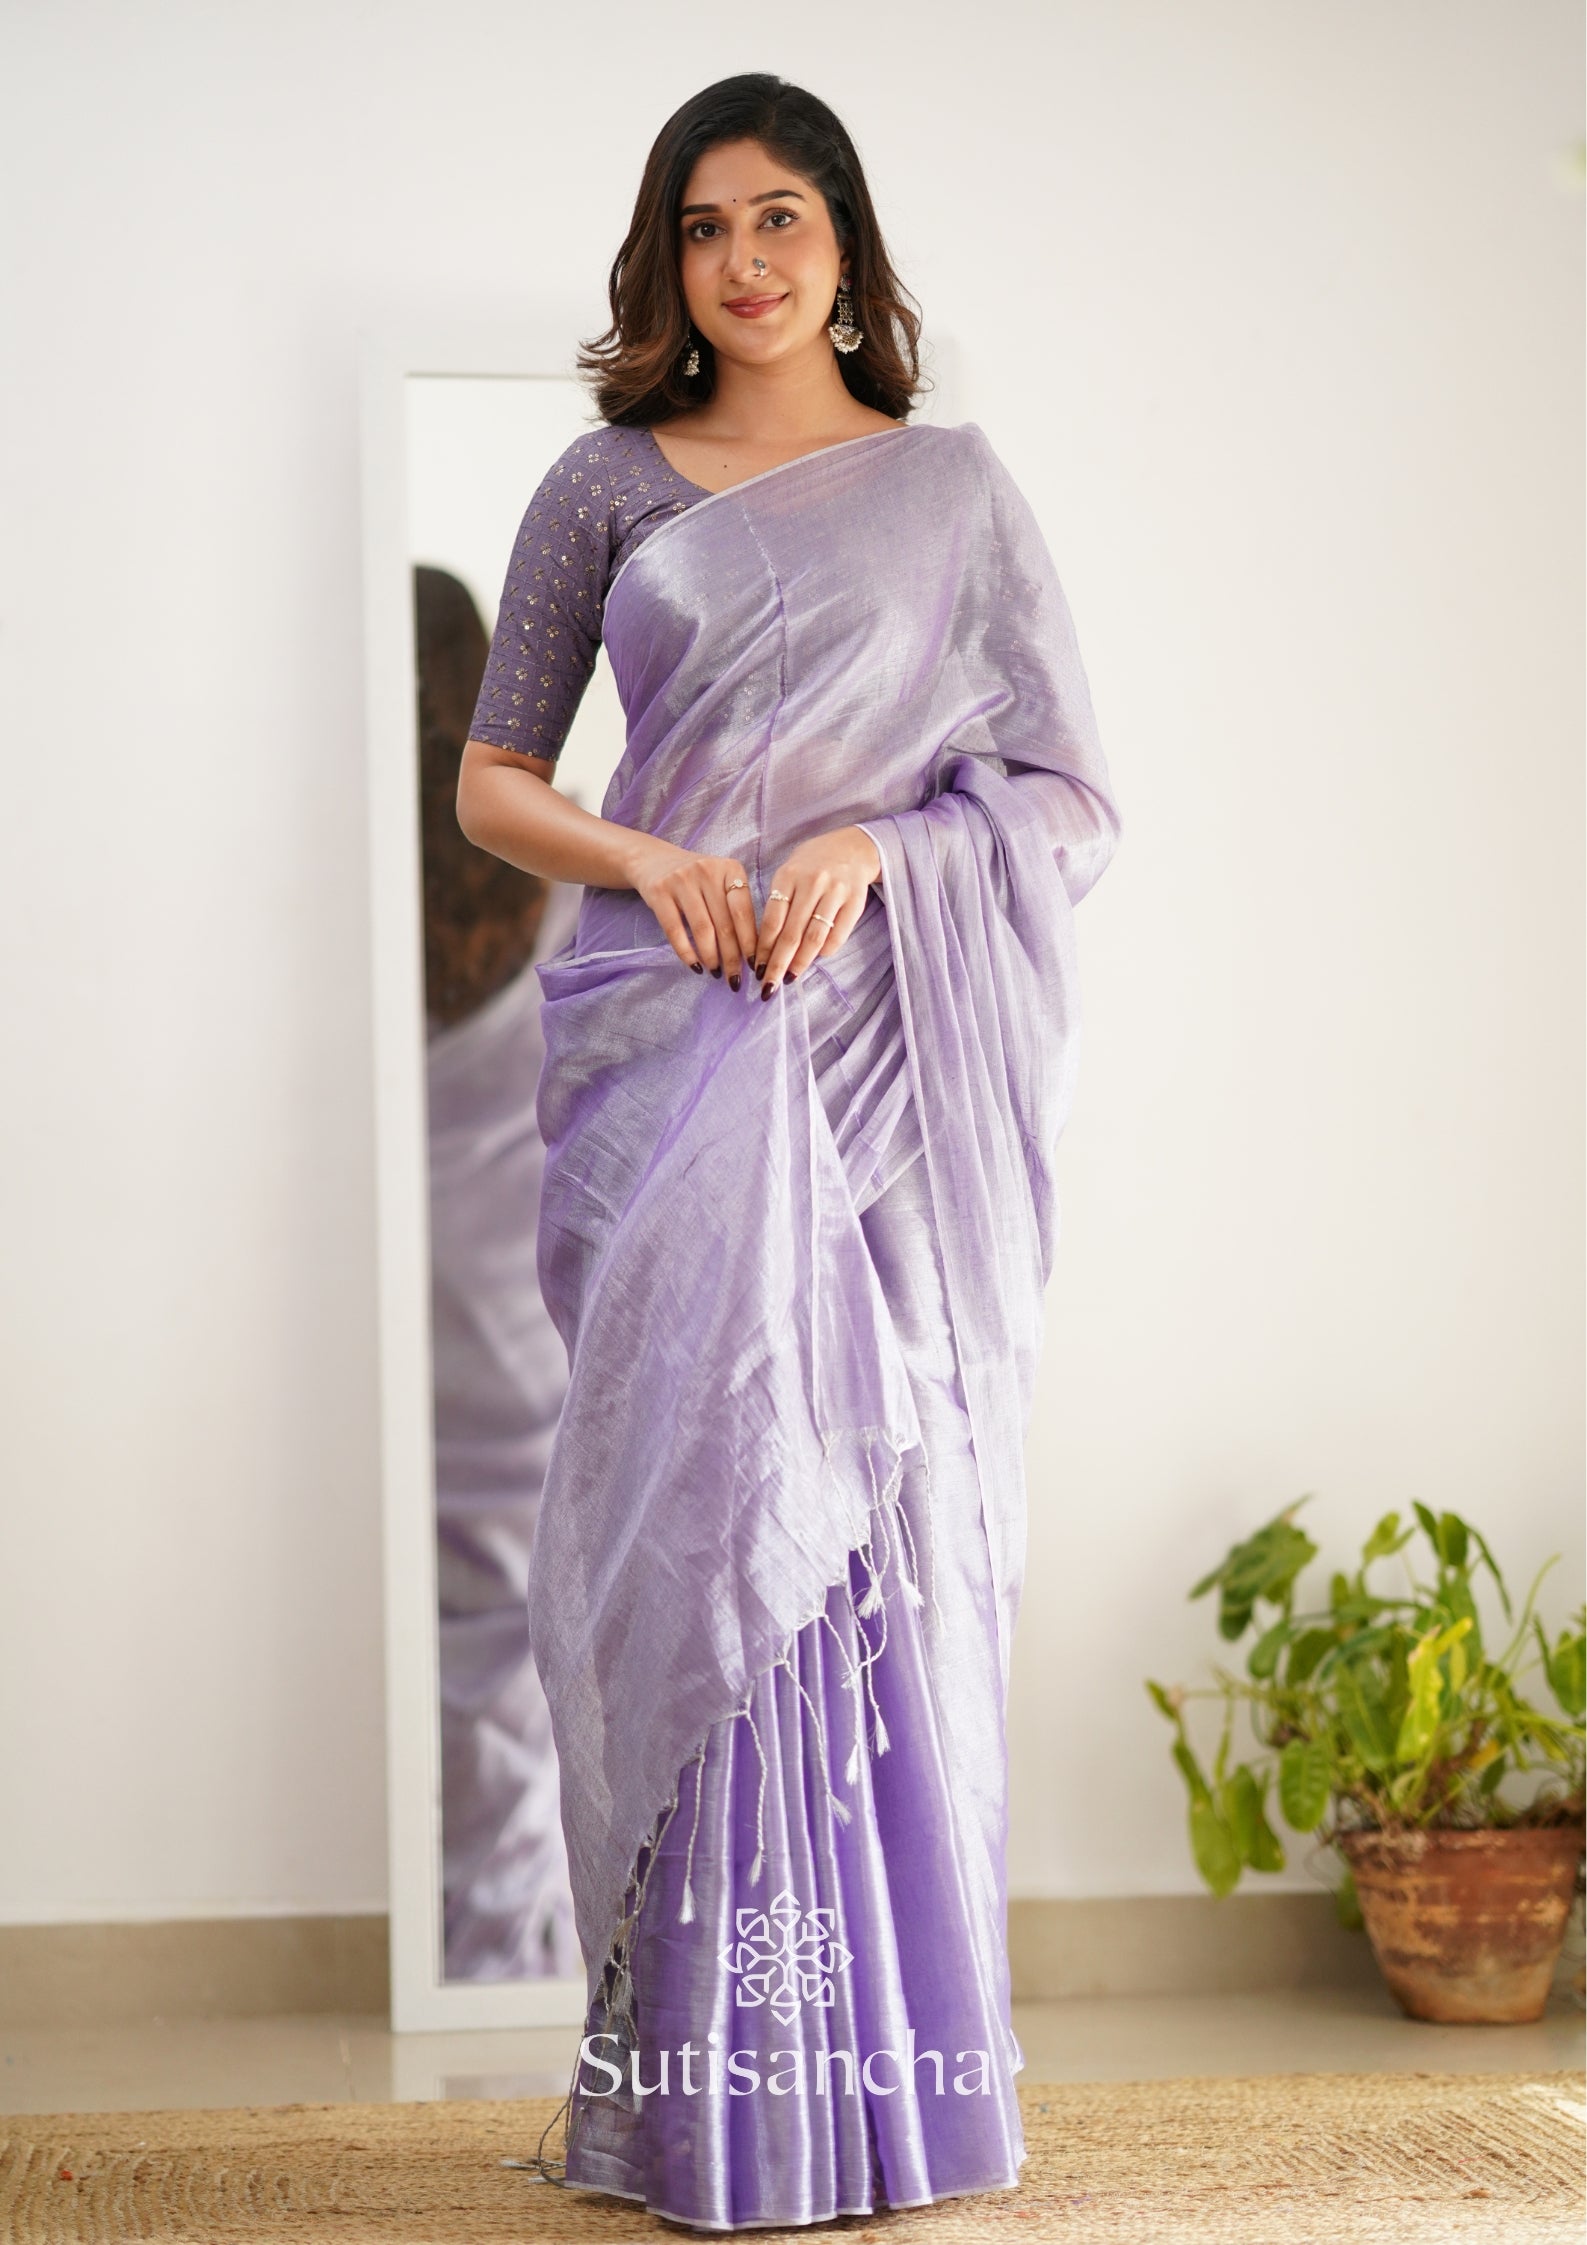 Sutisancha Lavender Handloom Tissue Saree With Designer Blouse